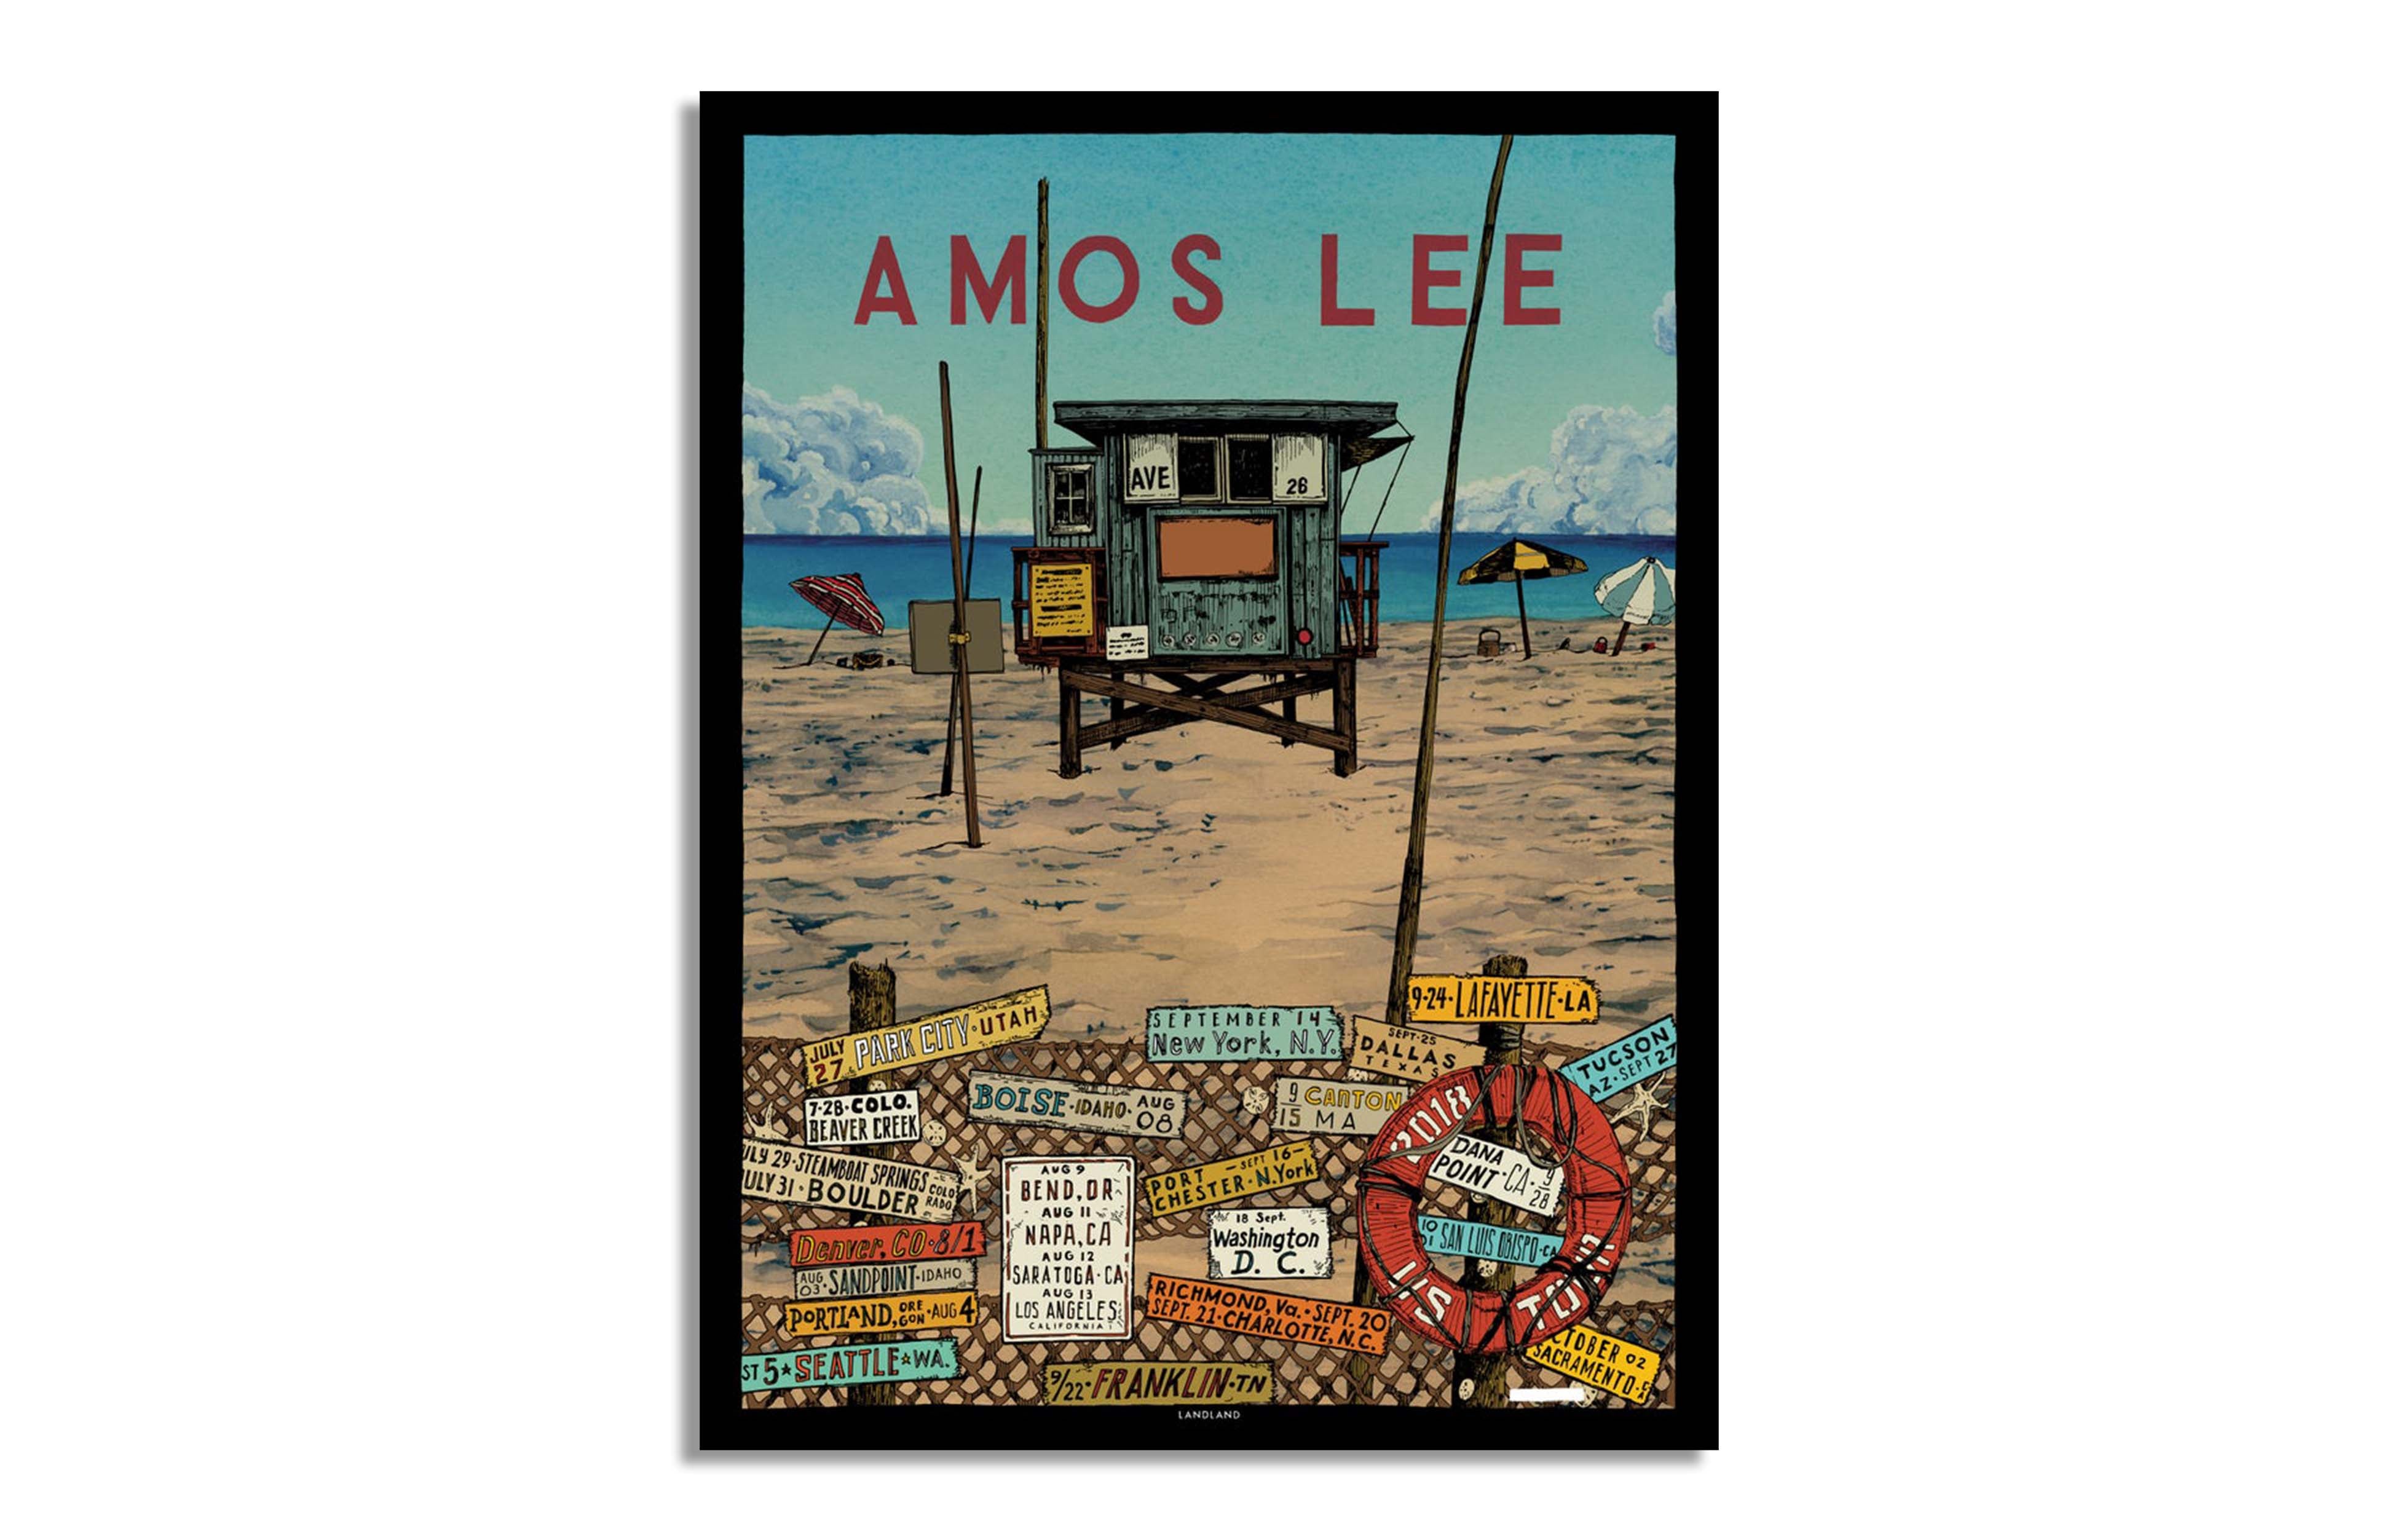 Amos Lee US Tour 2018 by Landland - Galerie F